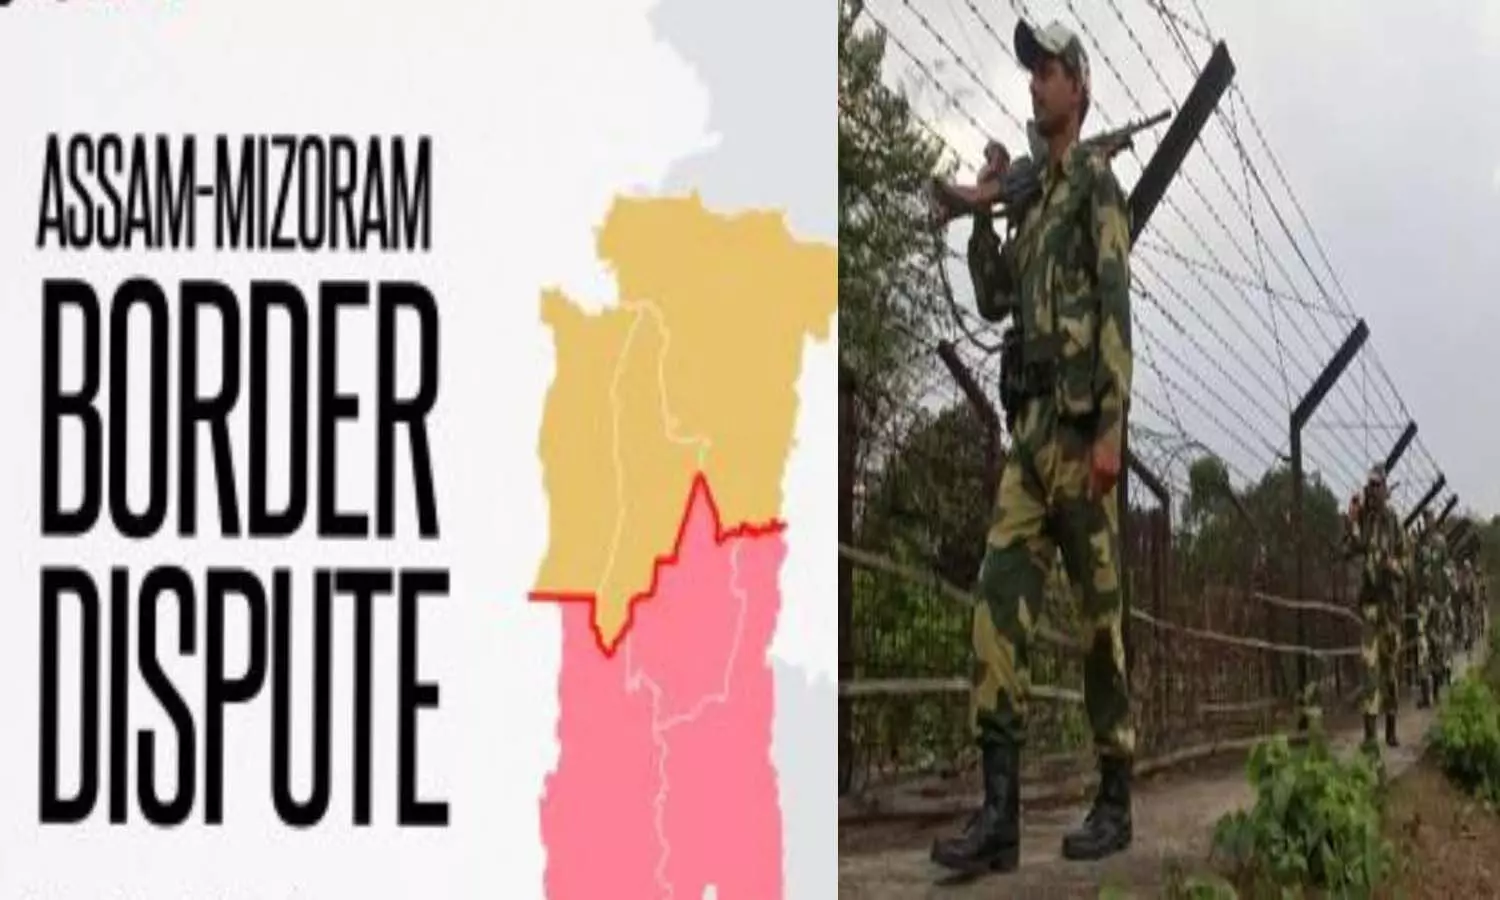 Assam Mizoram Border Dispute